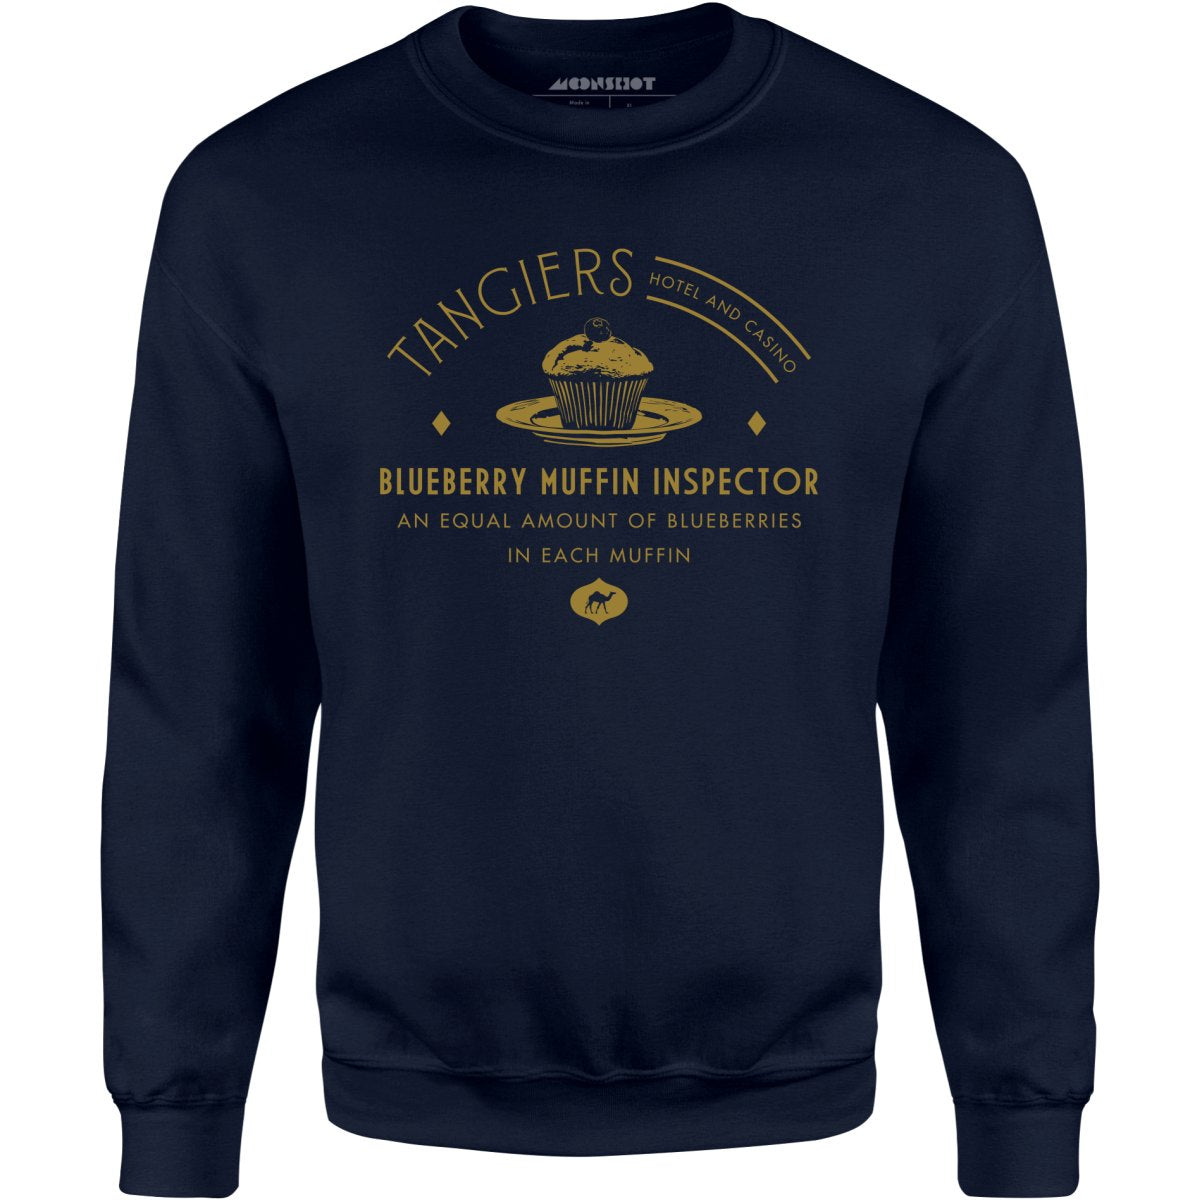 Tangiers Blueberry Muffin Inspector - Unisex Sweatshirt